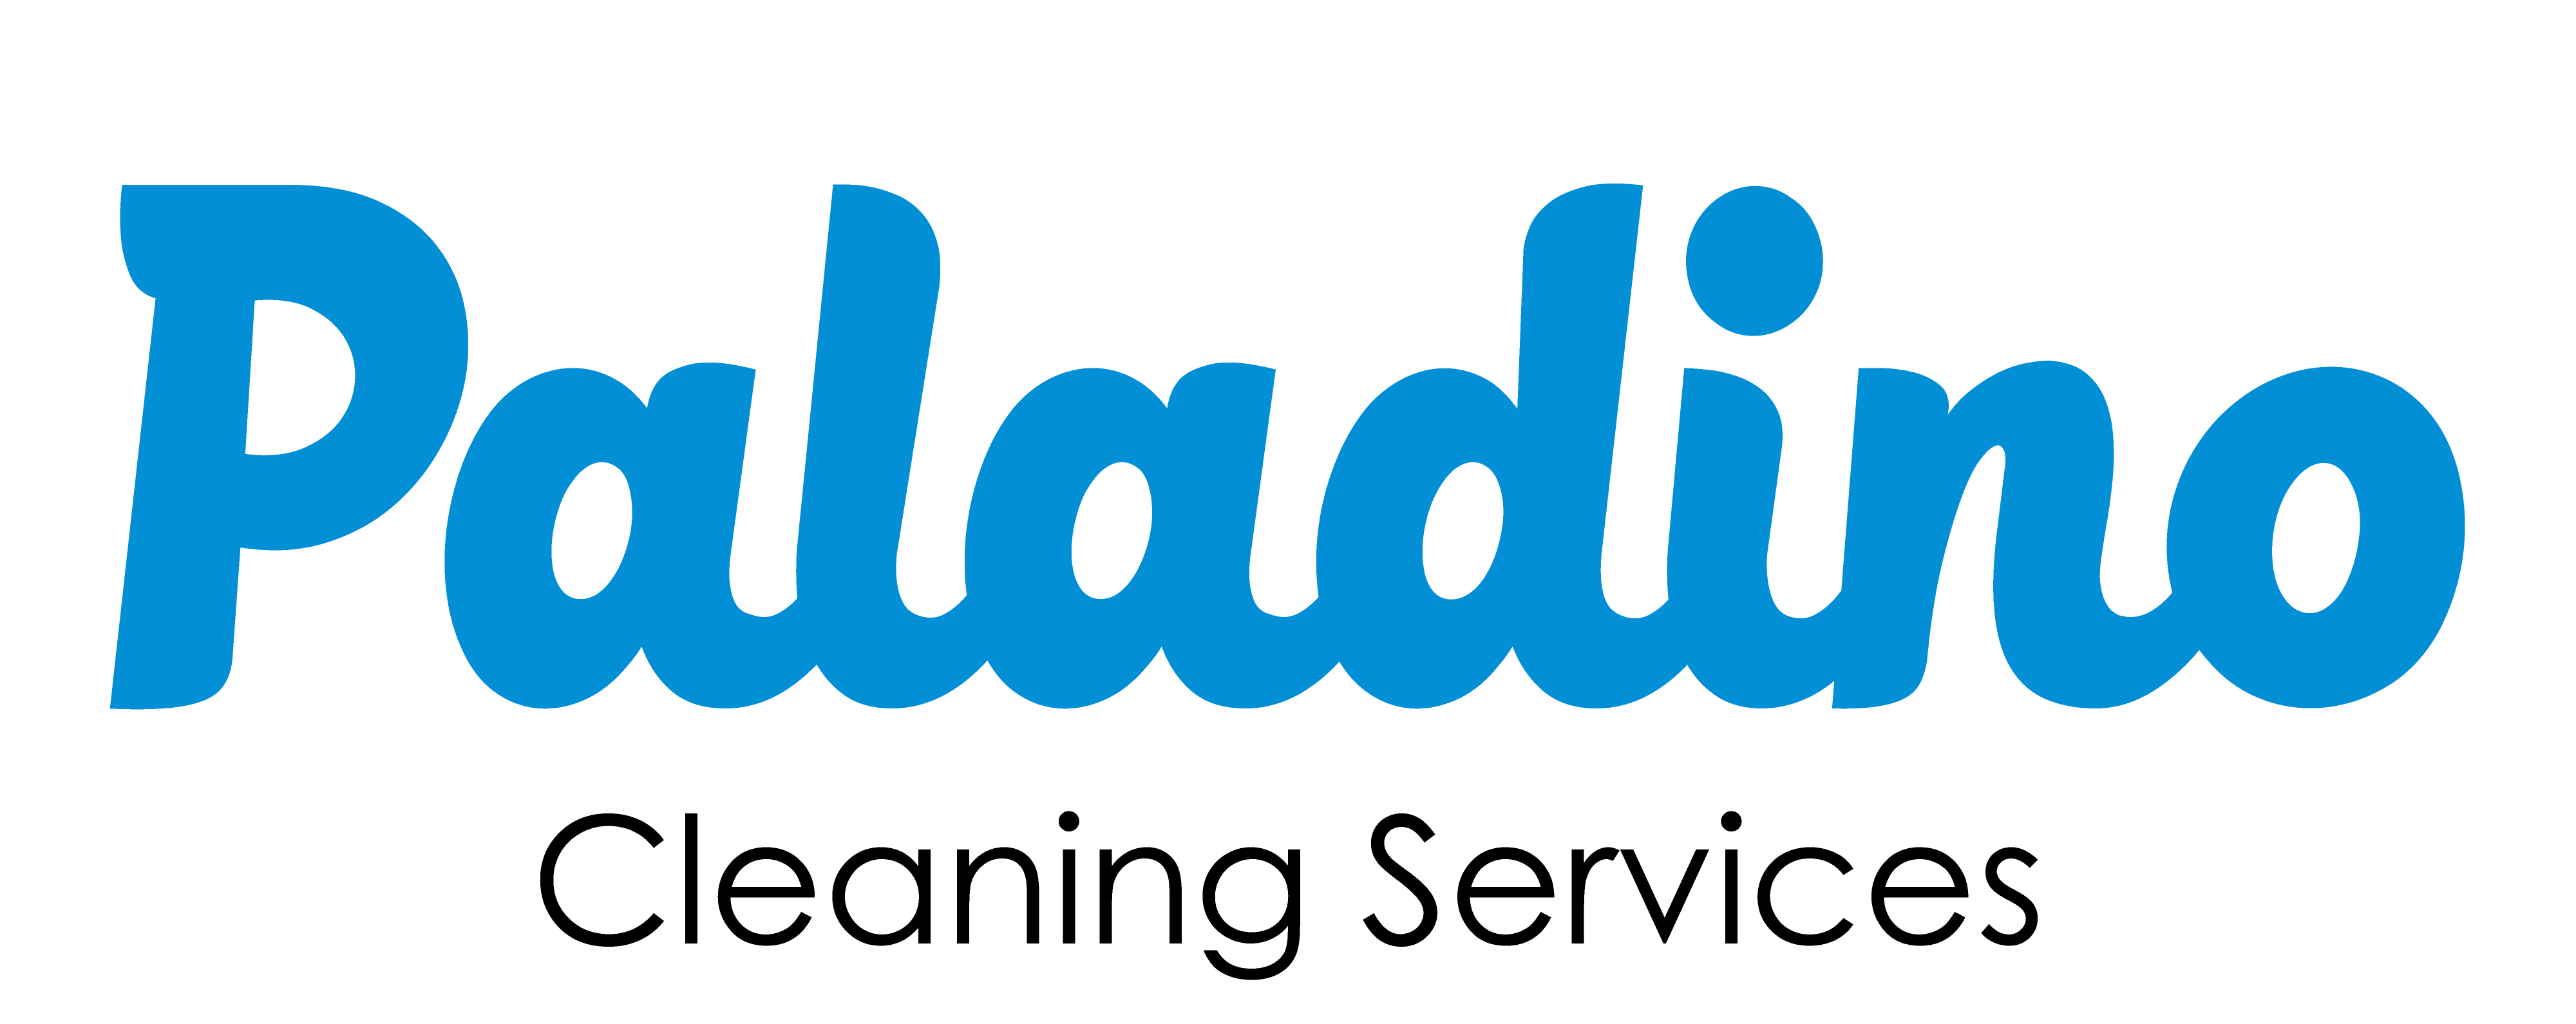 Paladino Cleaning Services Logo